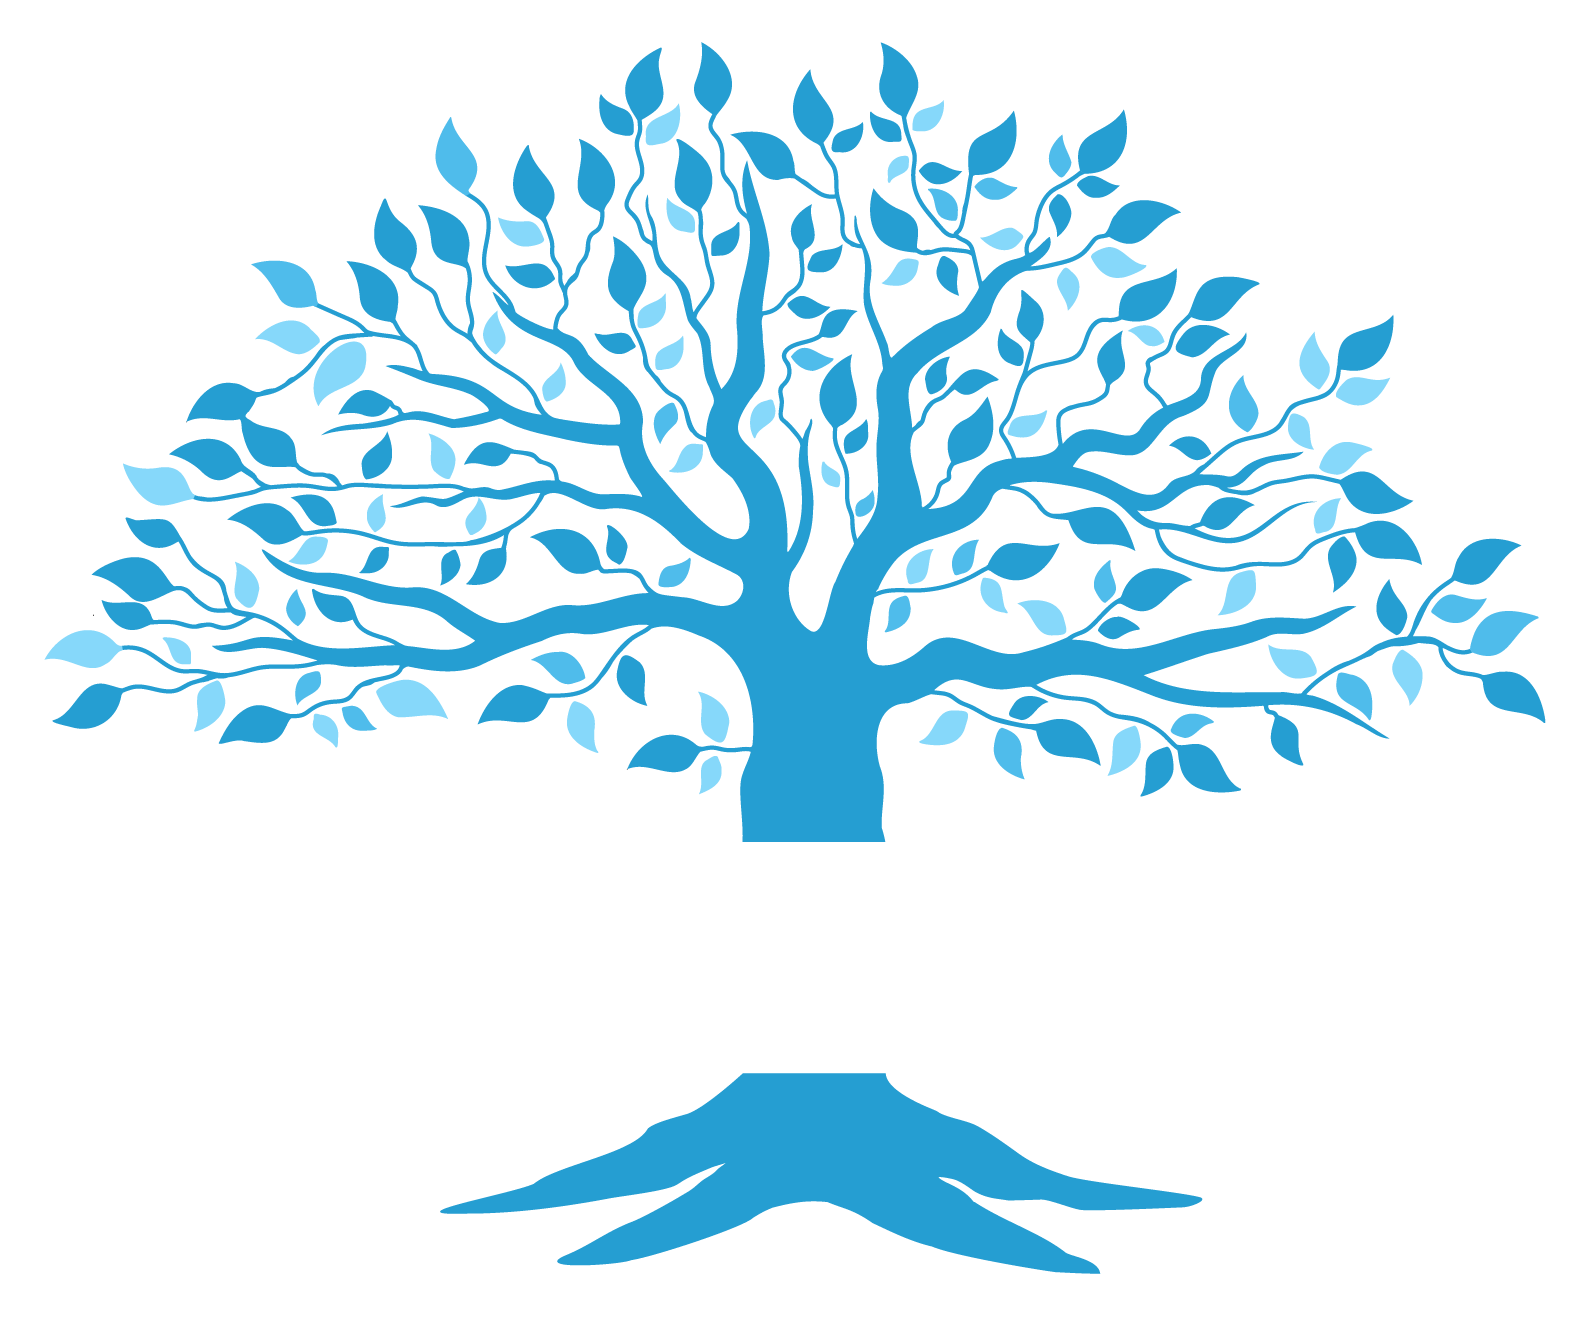 Community Capital Holdings Corp logo, white